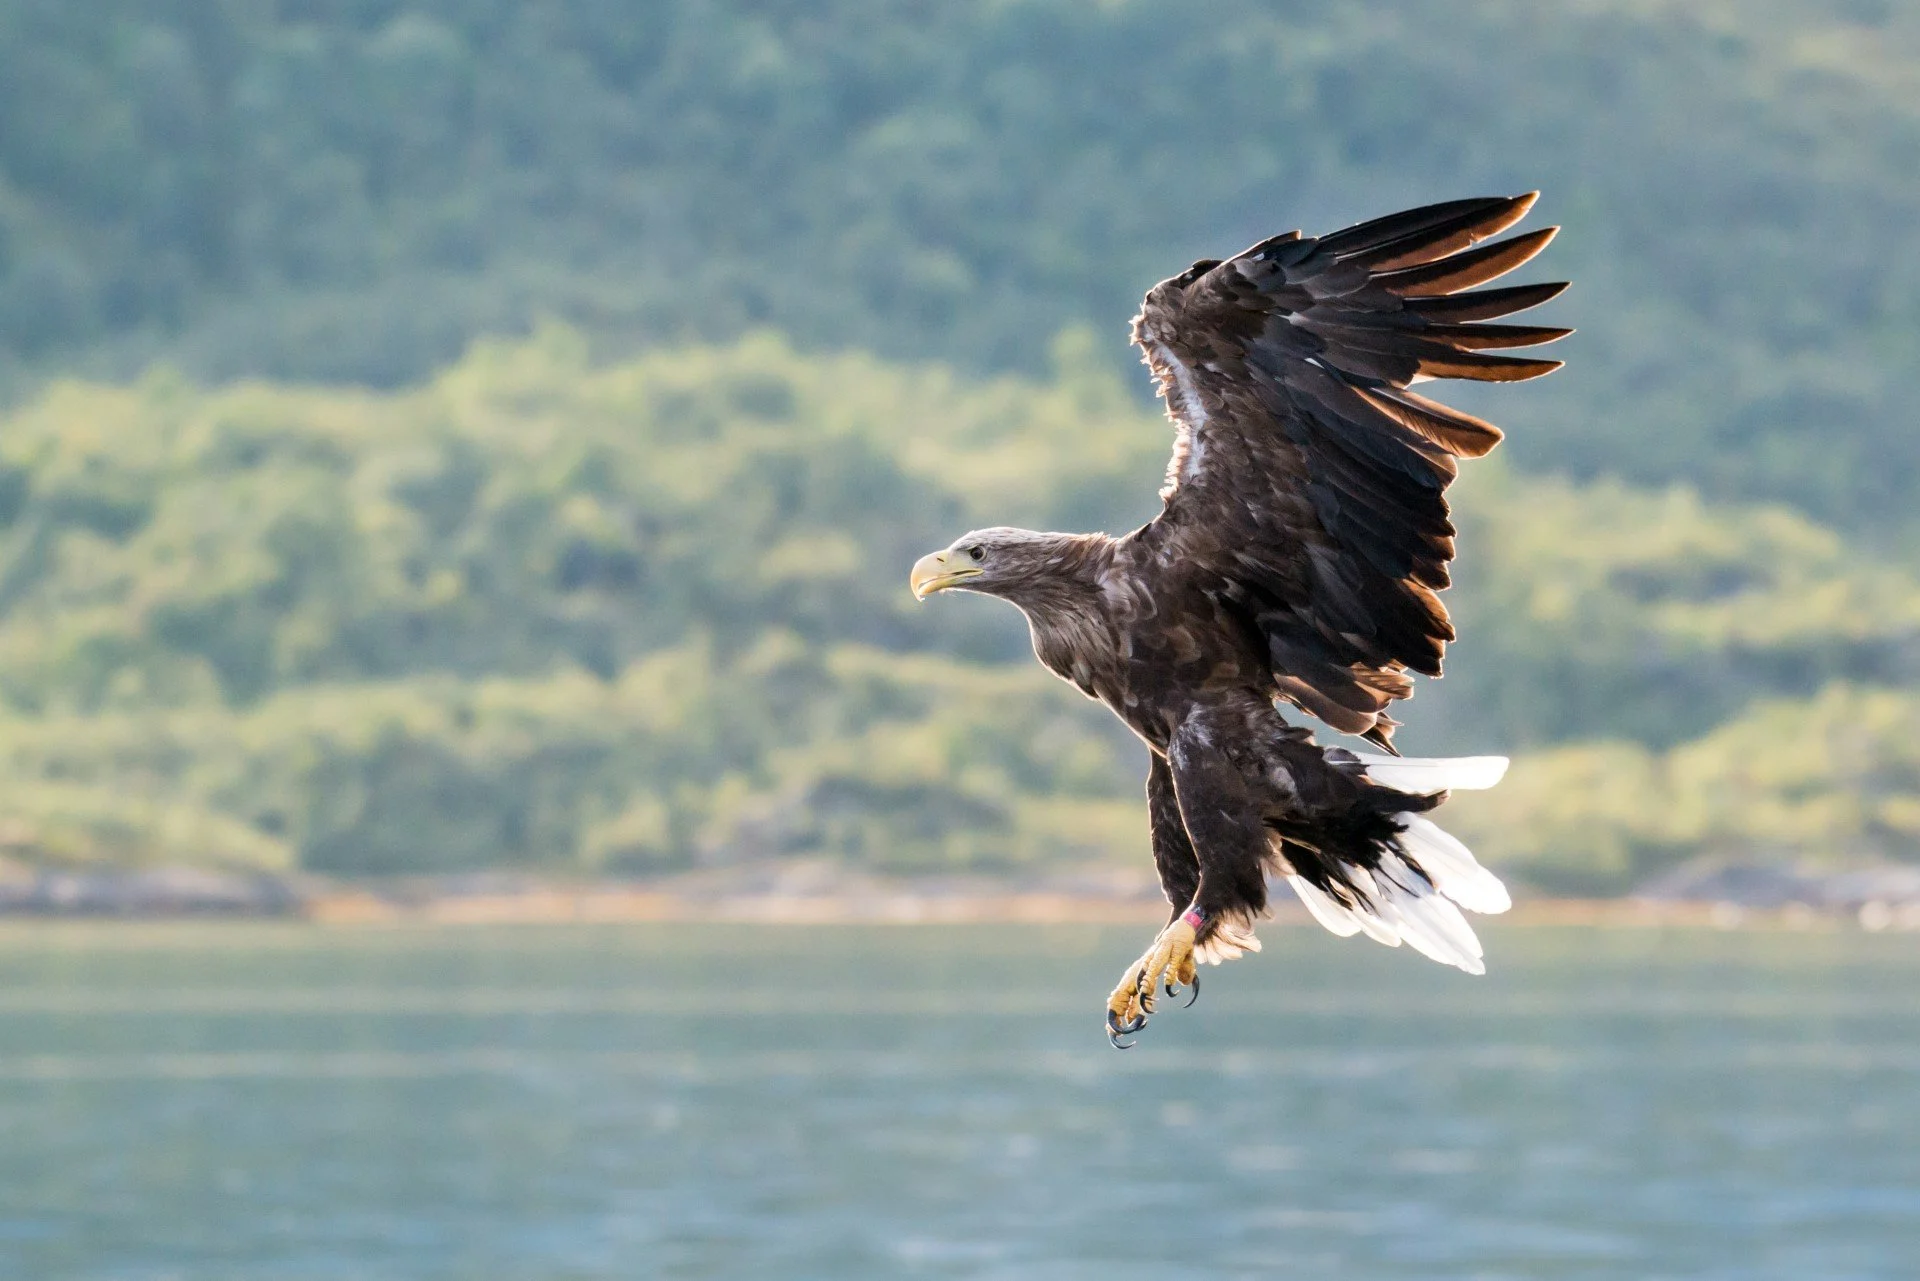 sea-eagle-safari-norway-hgr-108908-photo_photo_competition